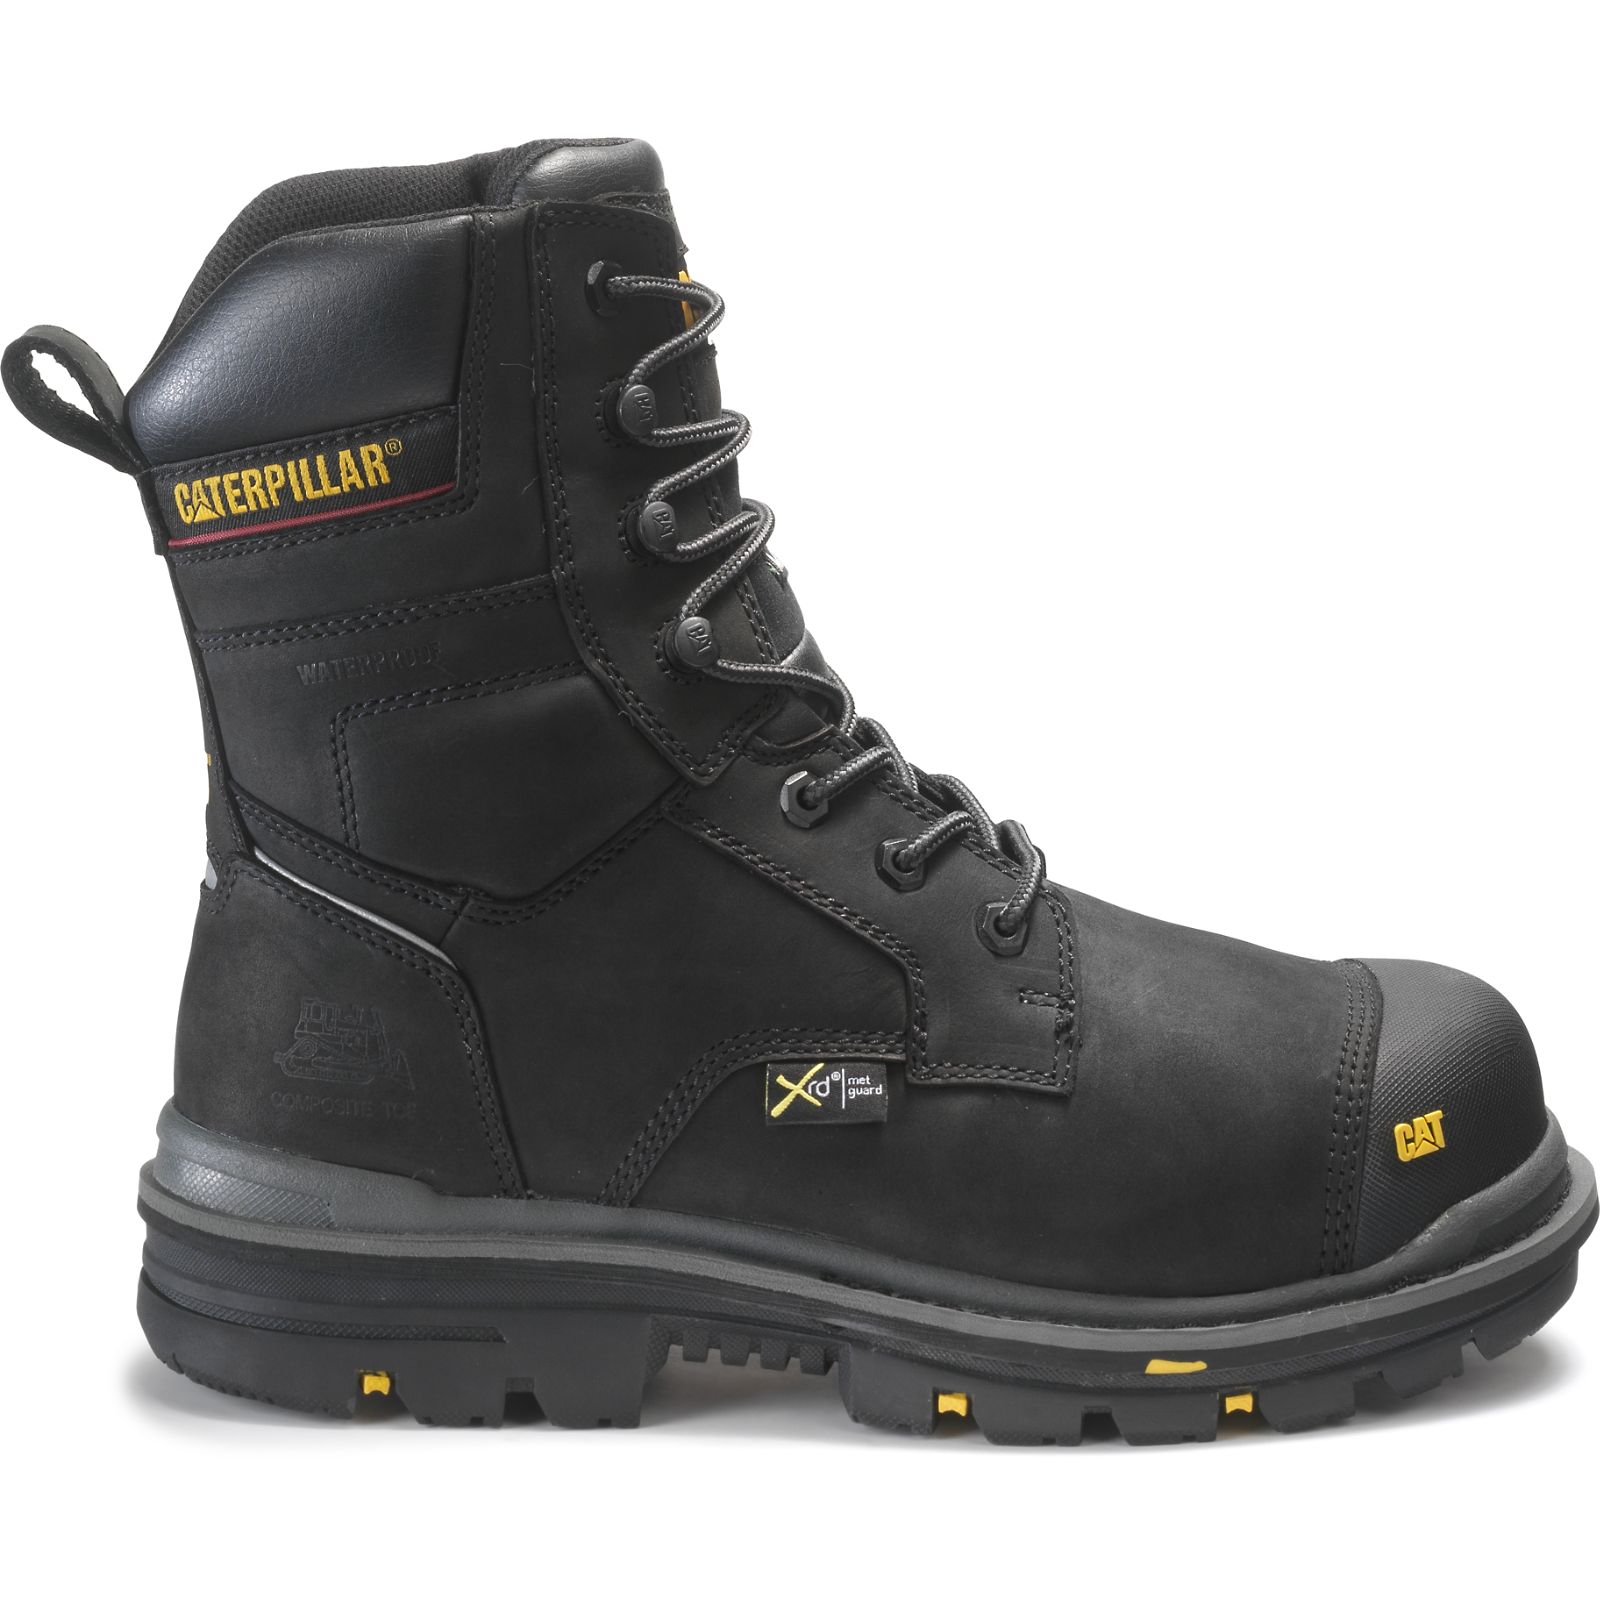 Caterpillar Work Boots Dubai - Caterpillar Rasp 8" Waterproof Met Csa Mens - Black FOWSXG534